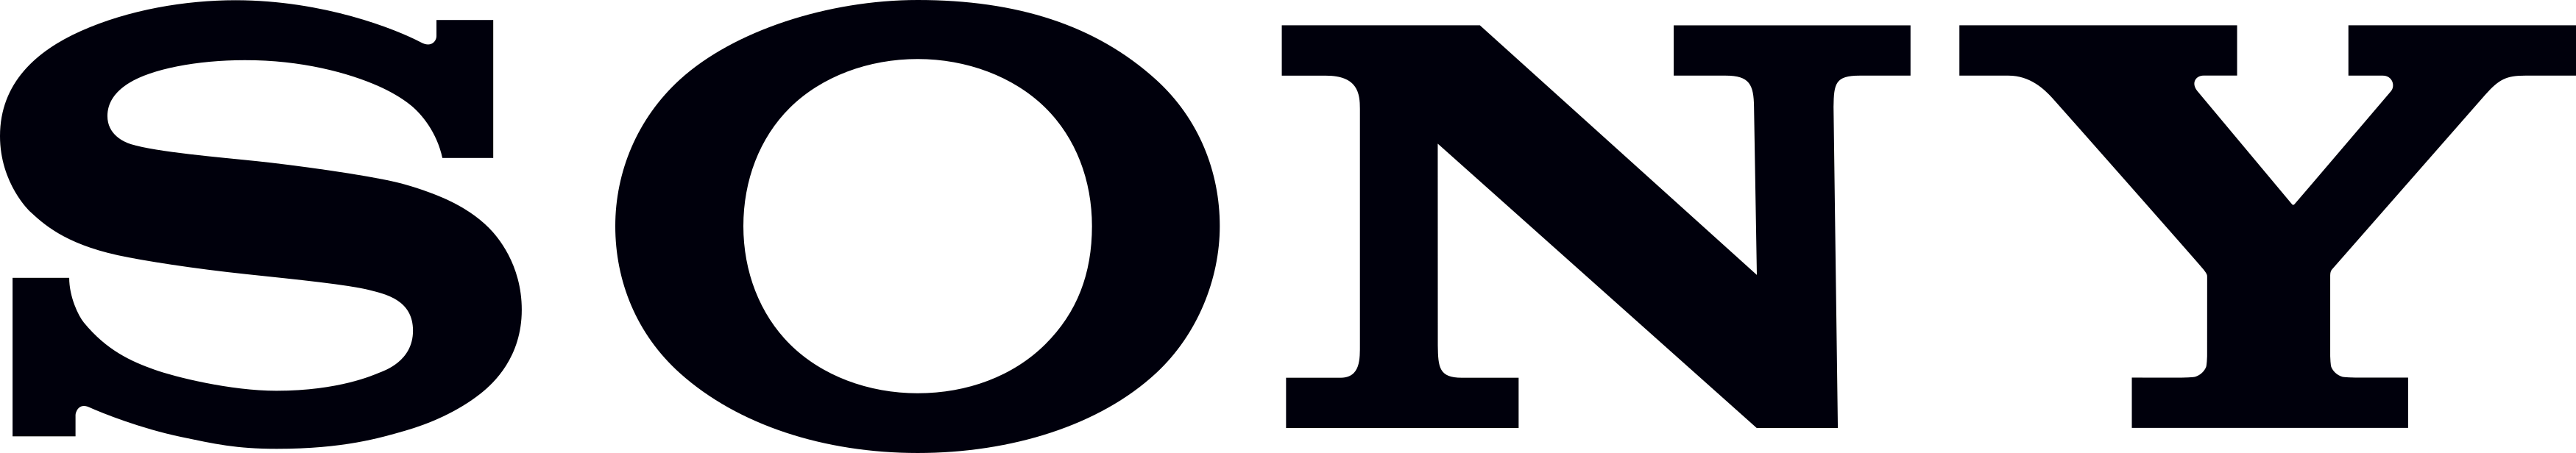 sony-logo-1